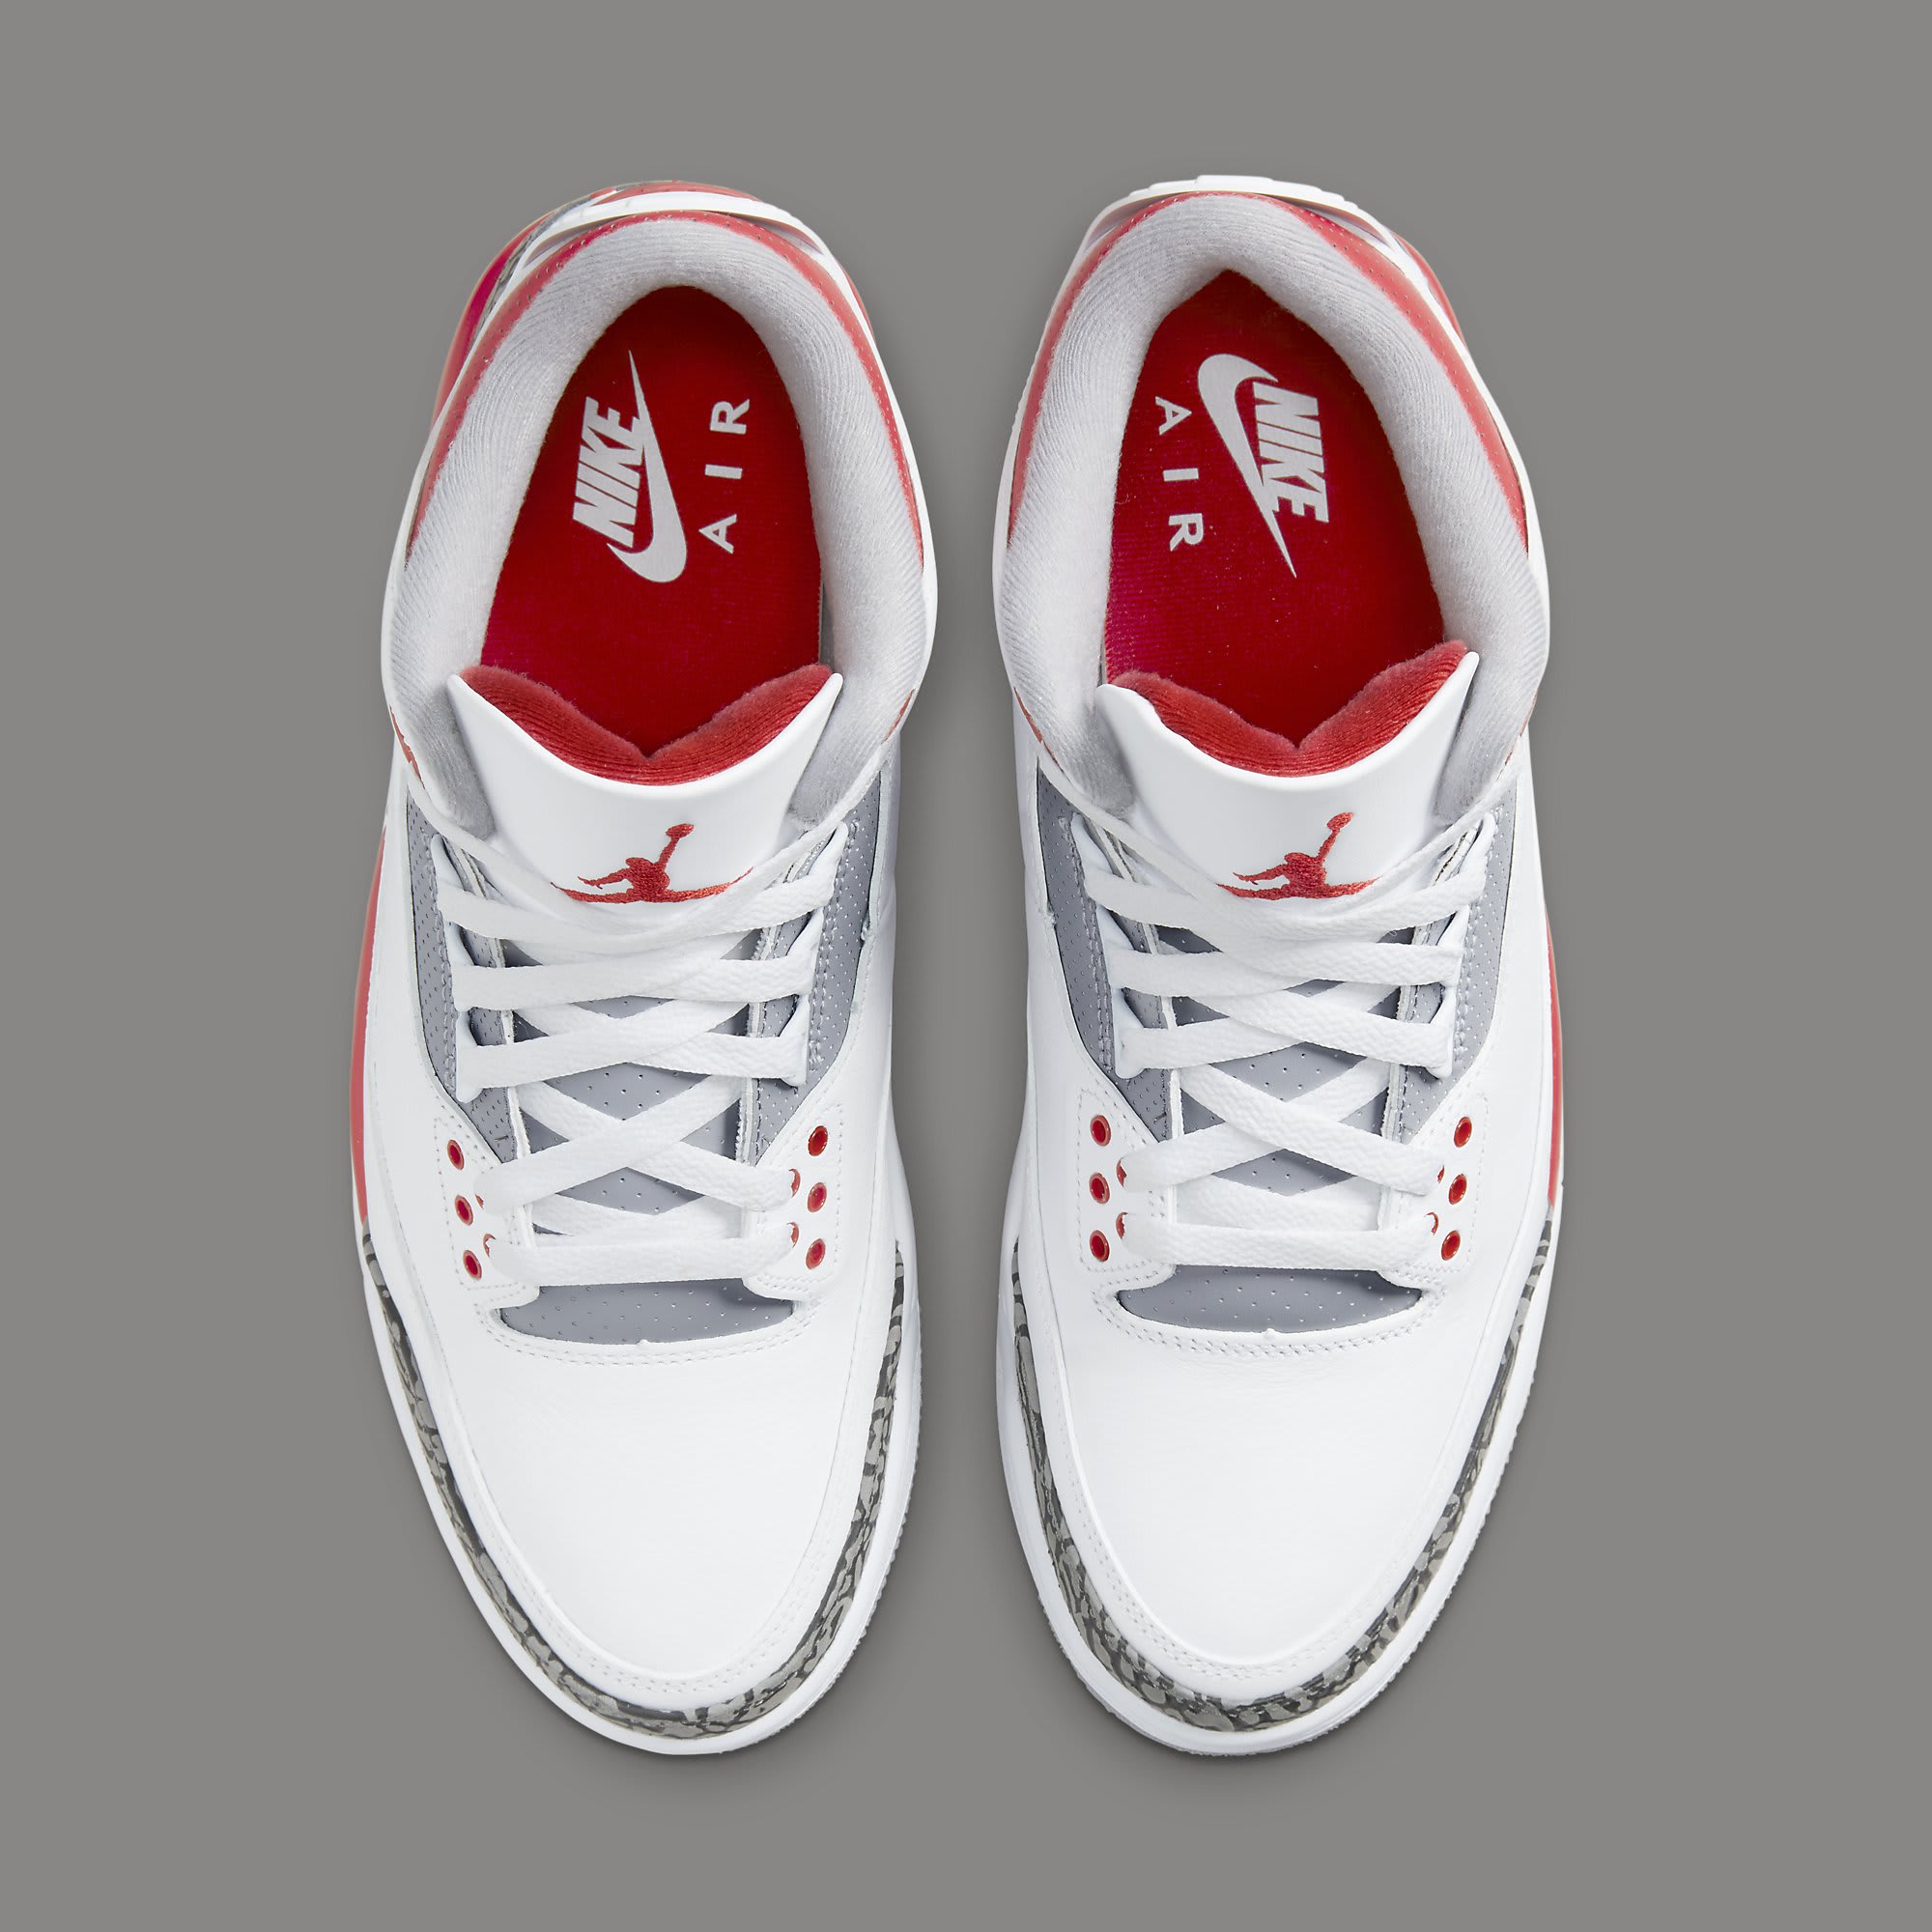 Air Jordan 3 III Fire Red OG 2022 Retro Release Date | Sole Collector